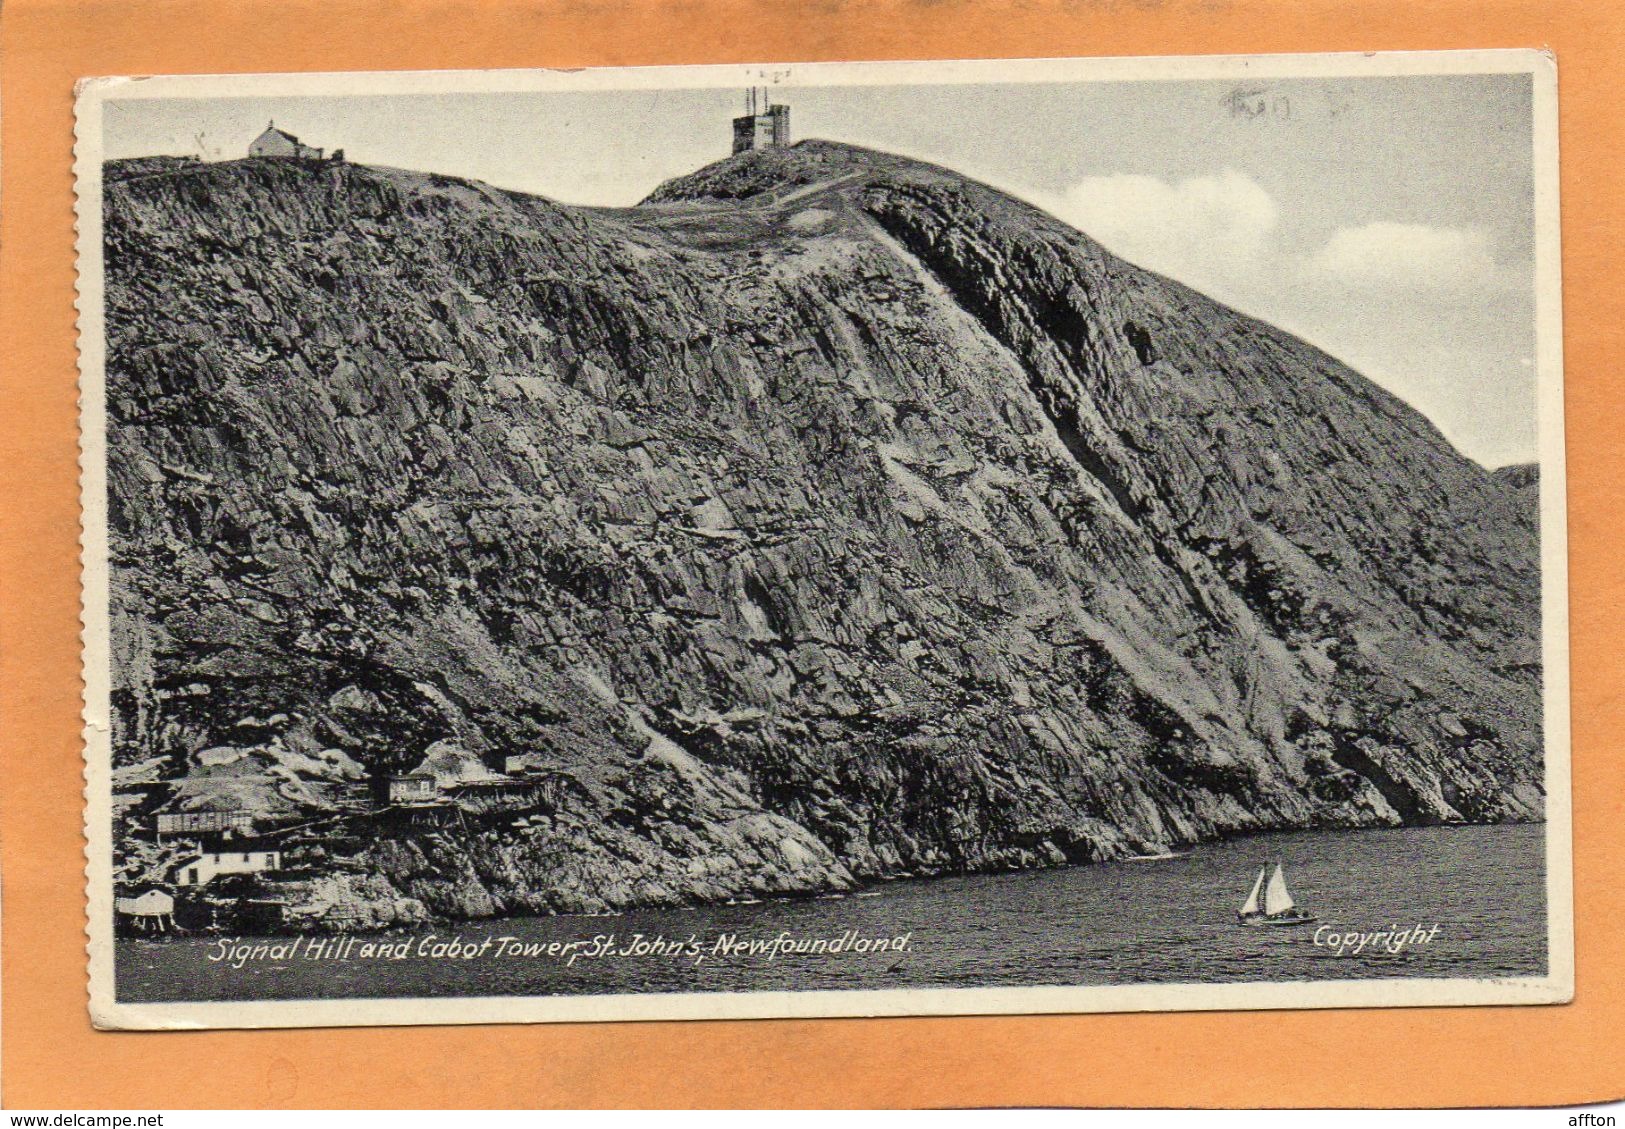 St Johns Newfoundland 1947 Postcard - St. John's